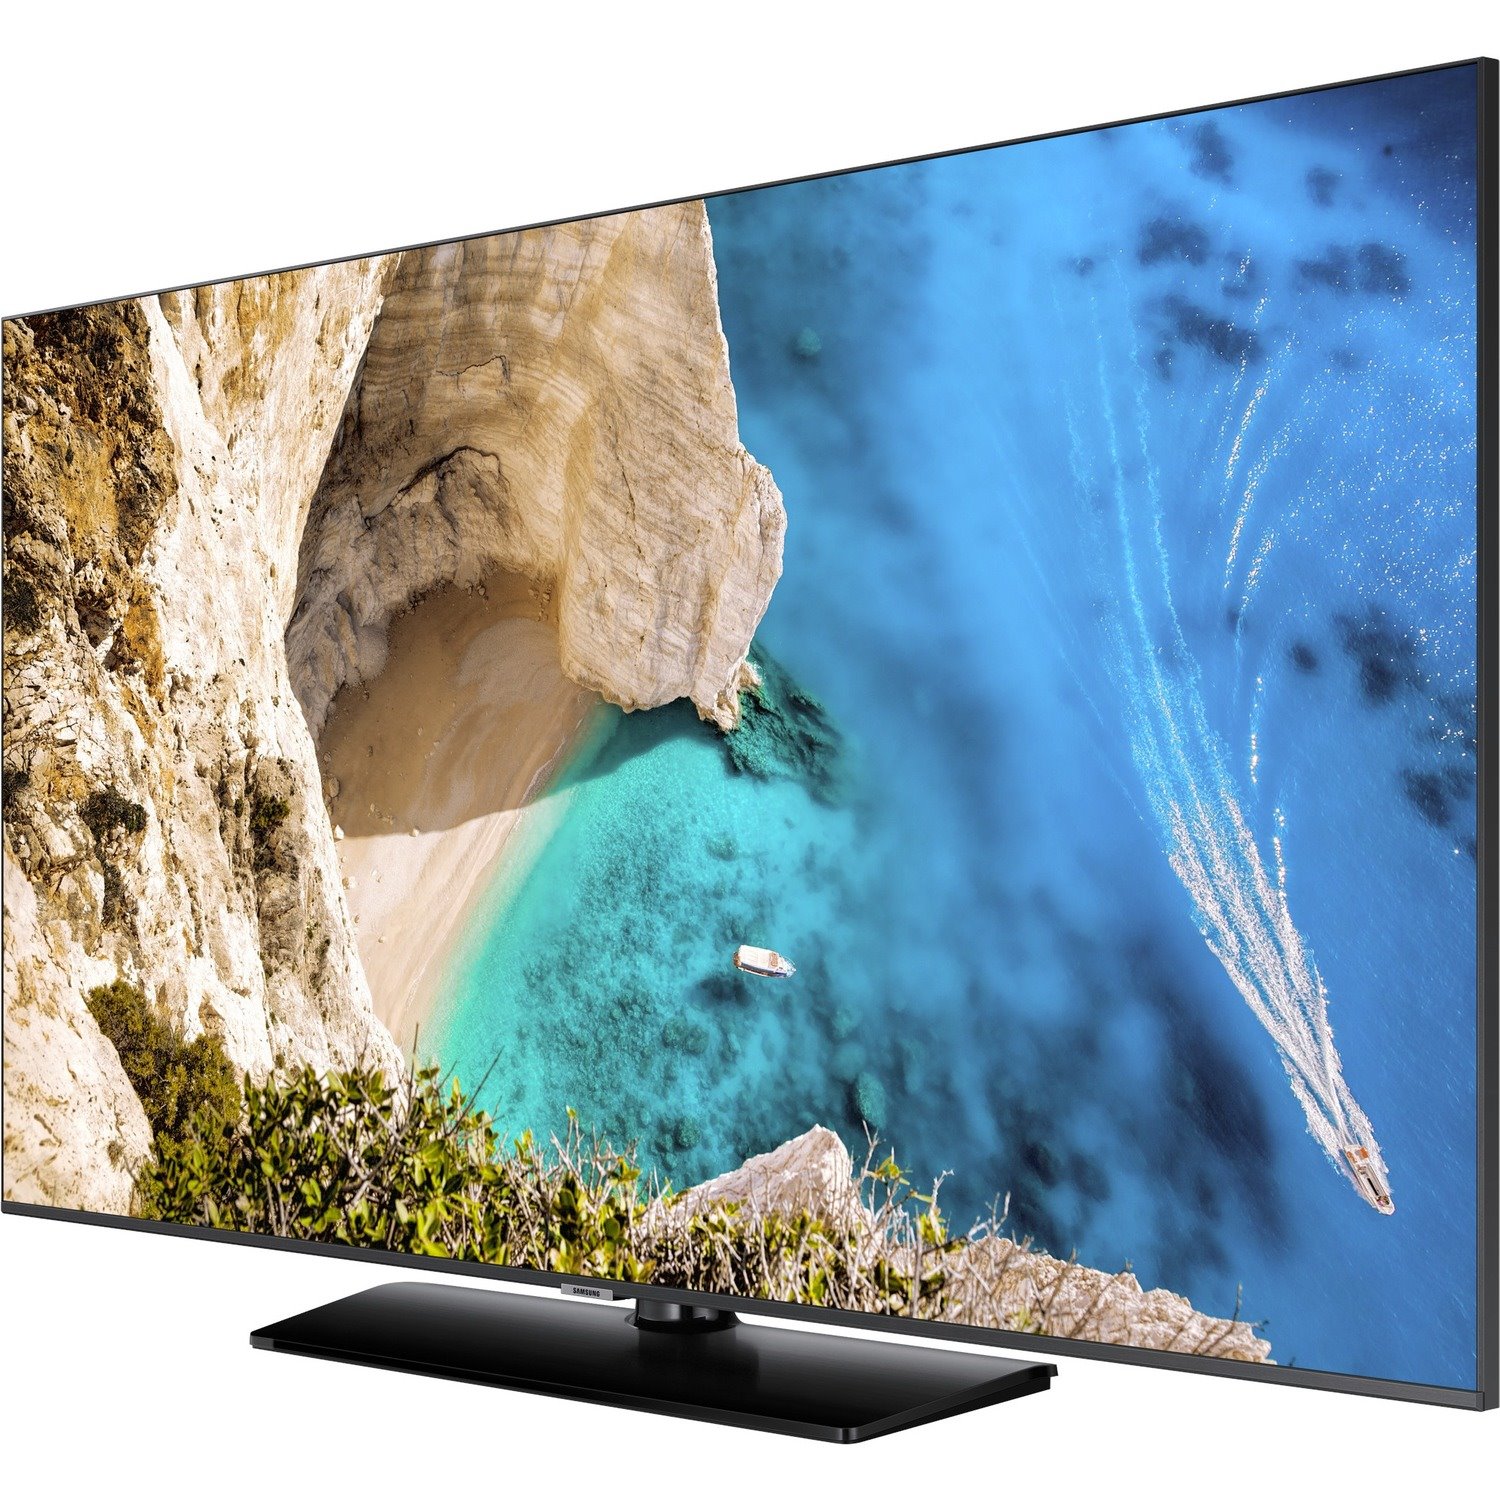 Samsung NT670U HG43NT670UF LED-LCD TV - 4K UHDTV - Black